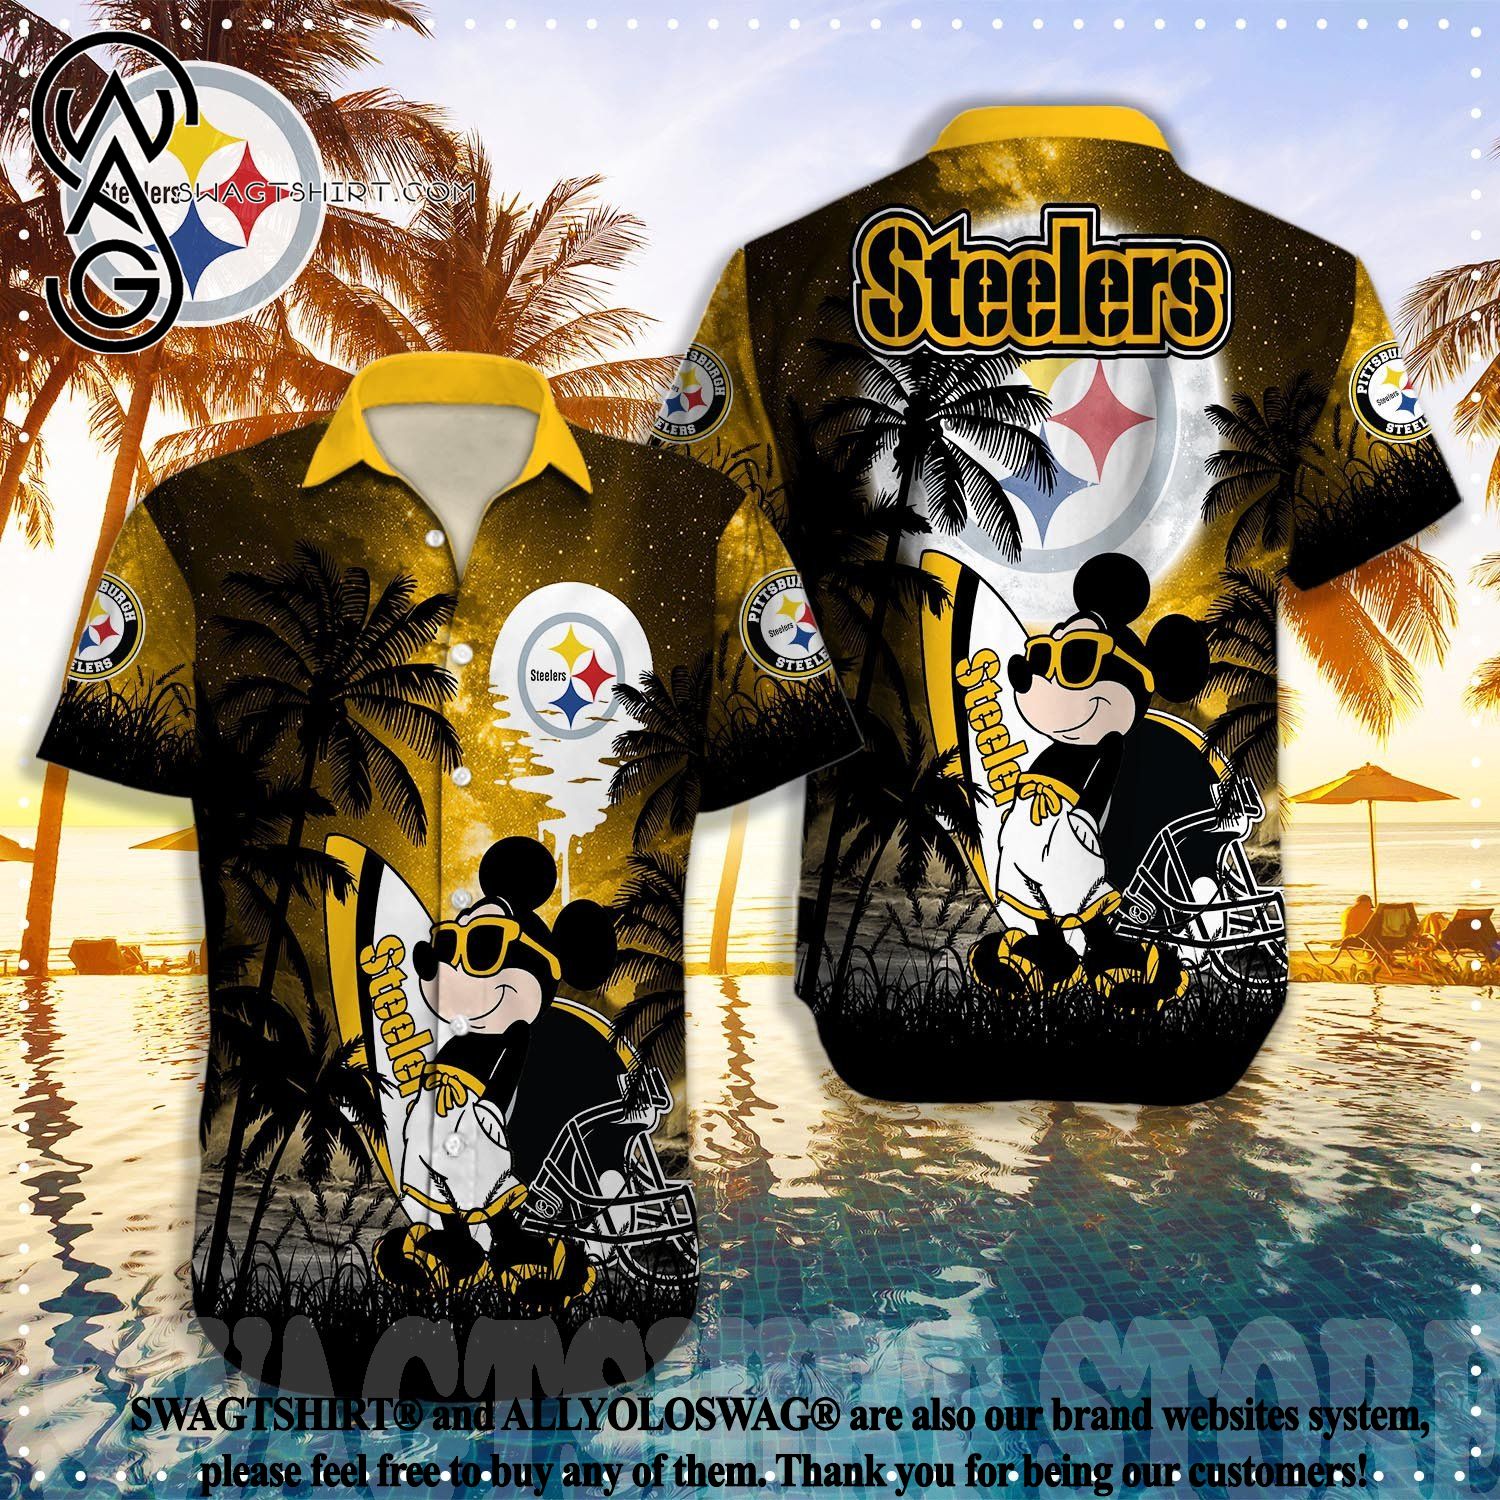 Pittsburgh Steelers Nfl Mens Tropical Sunset Hawaiian Shirts For Men And  Women - Banantees